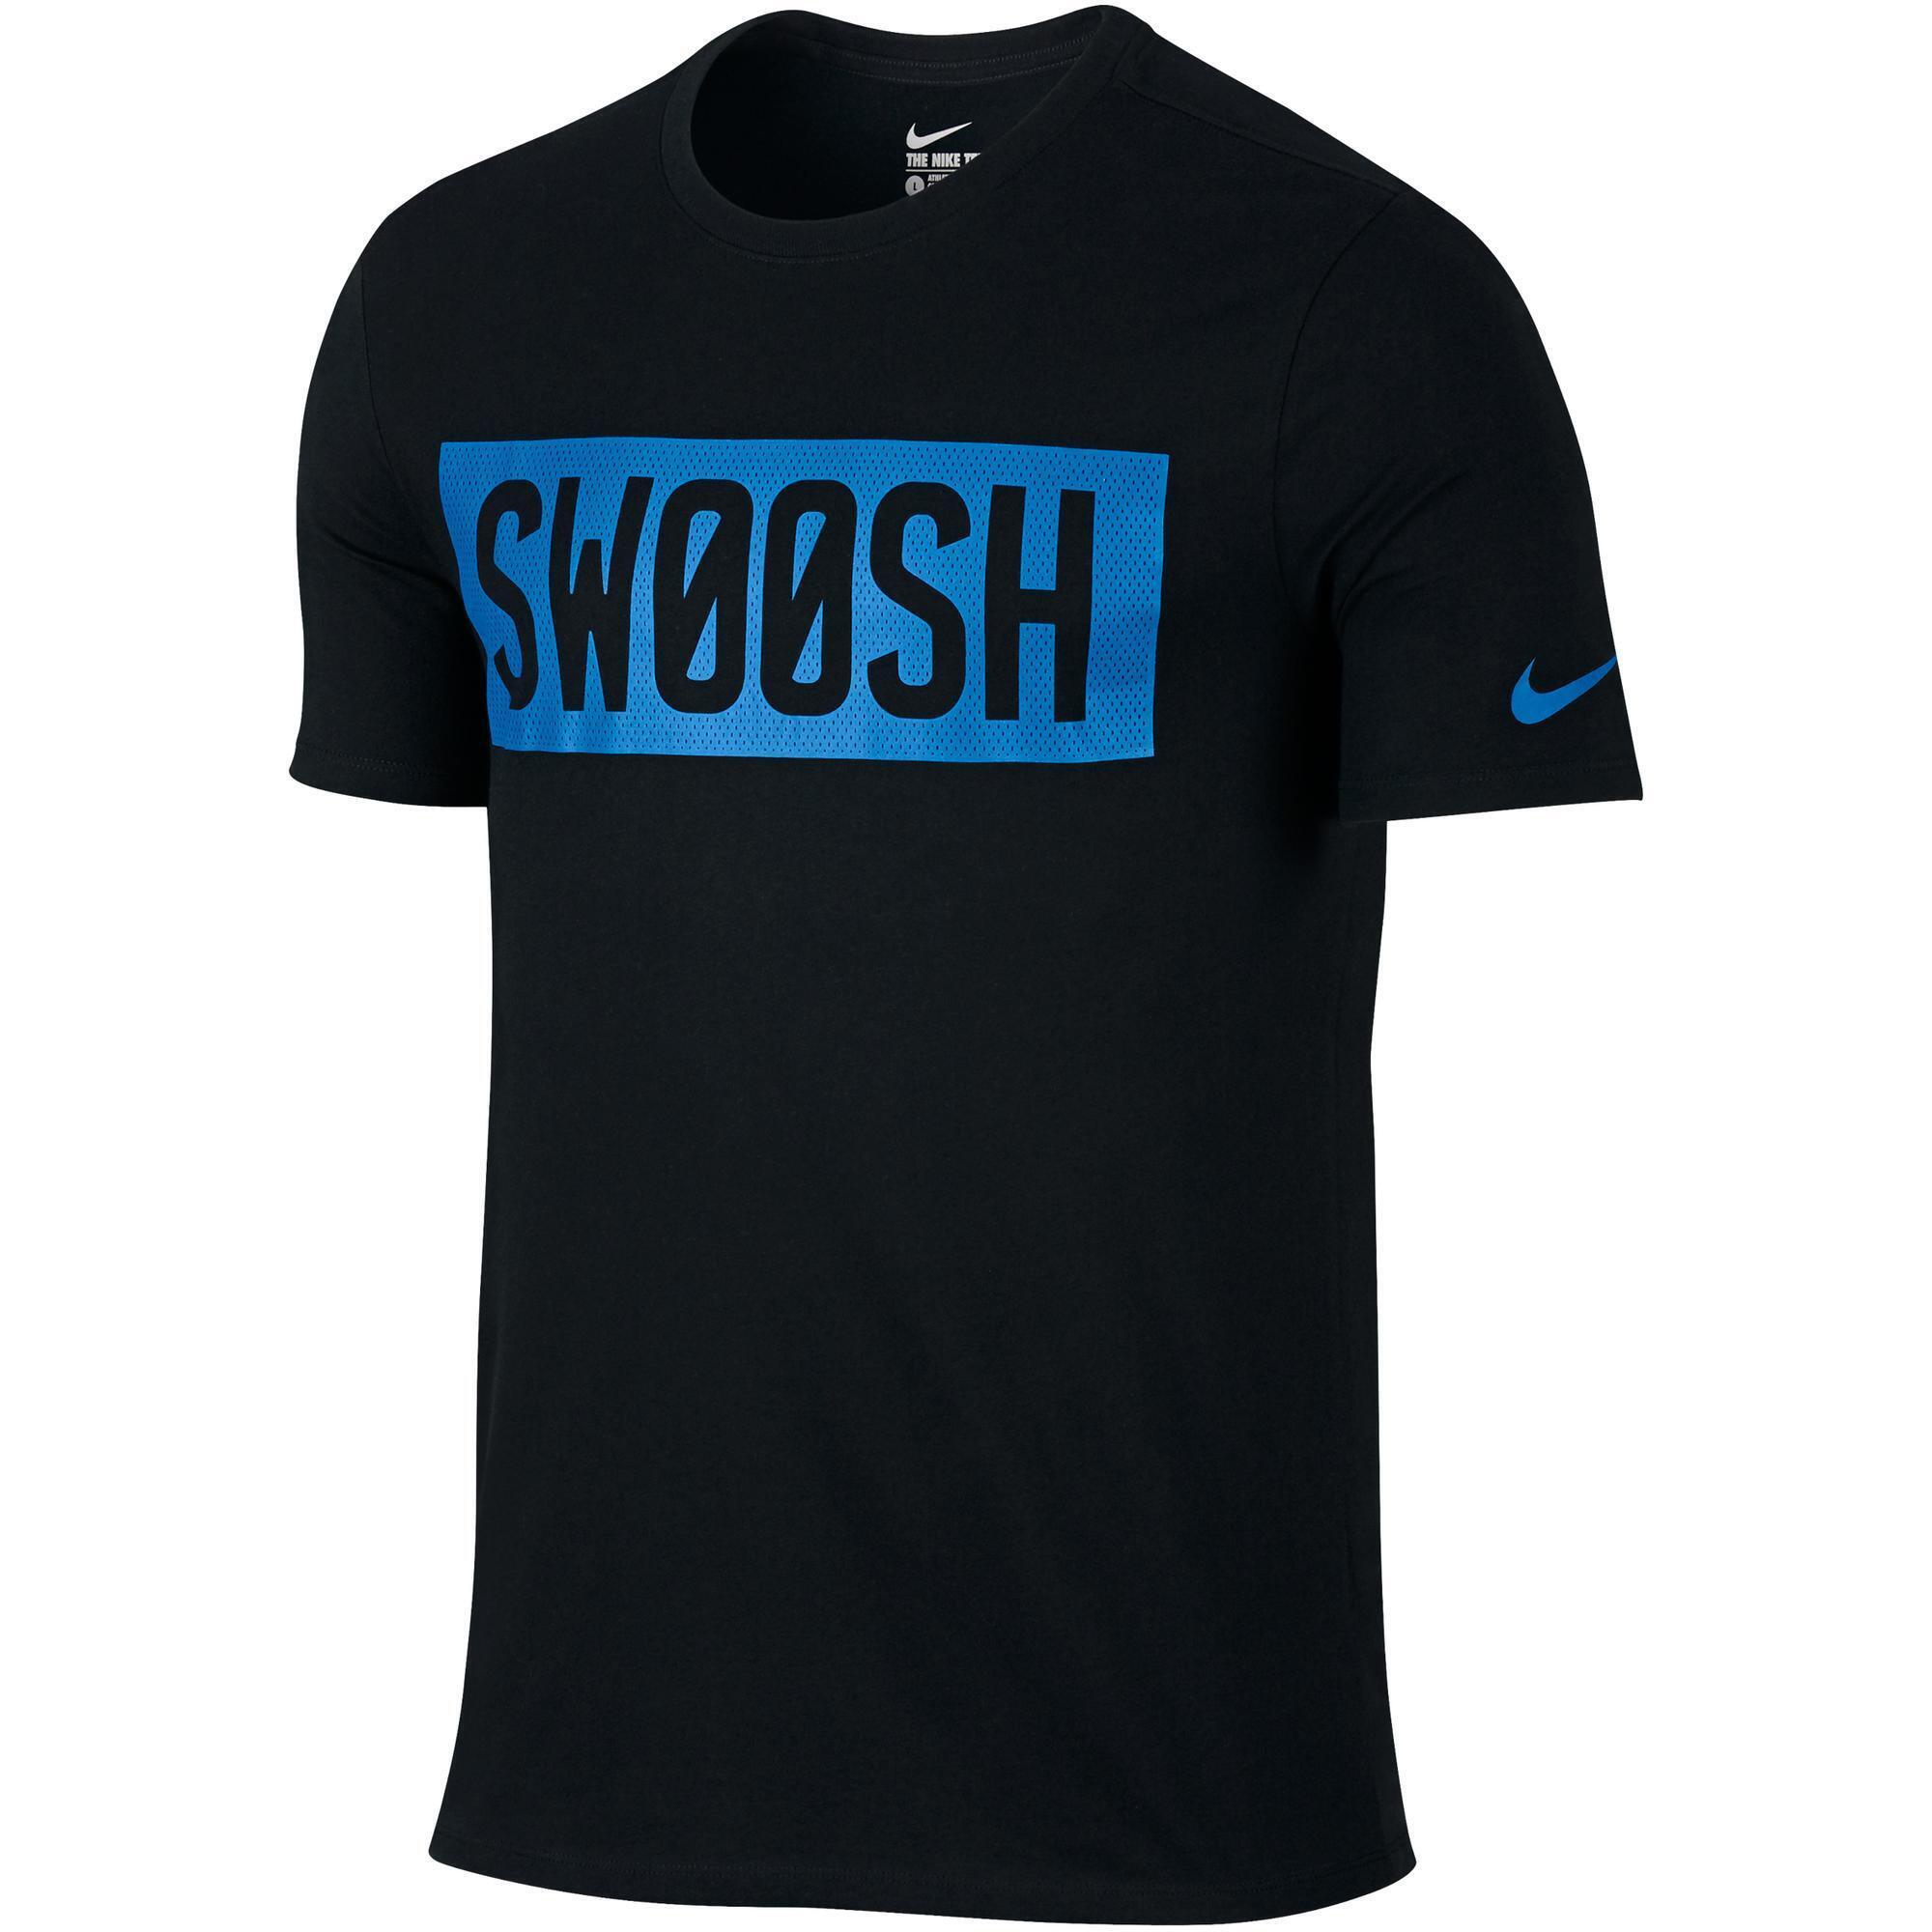 NIKE Swoosh Fitness T-Shirt - Black